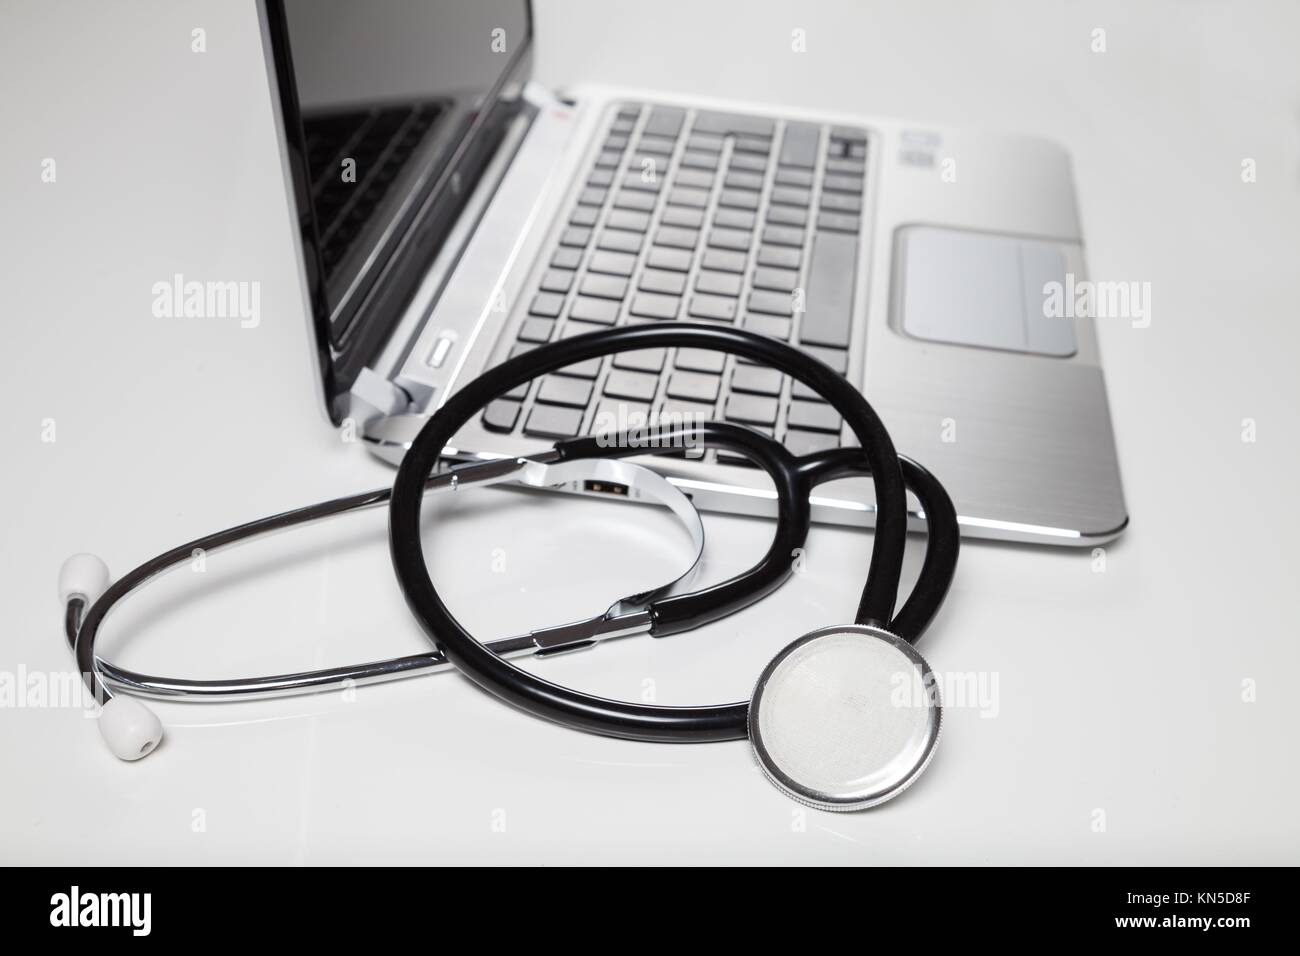 stethoscope and laptop on desk. Stock Photo